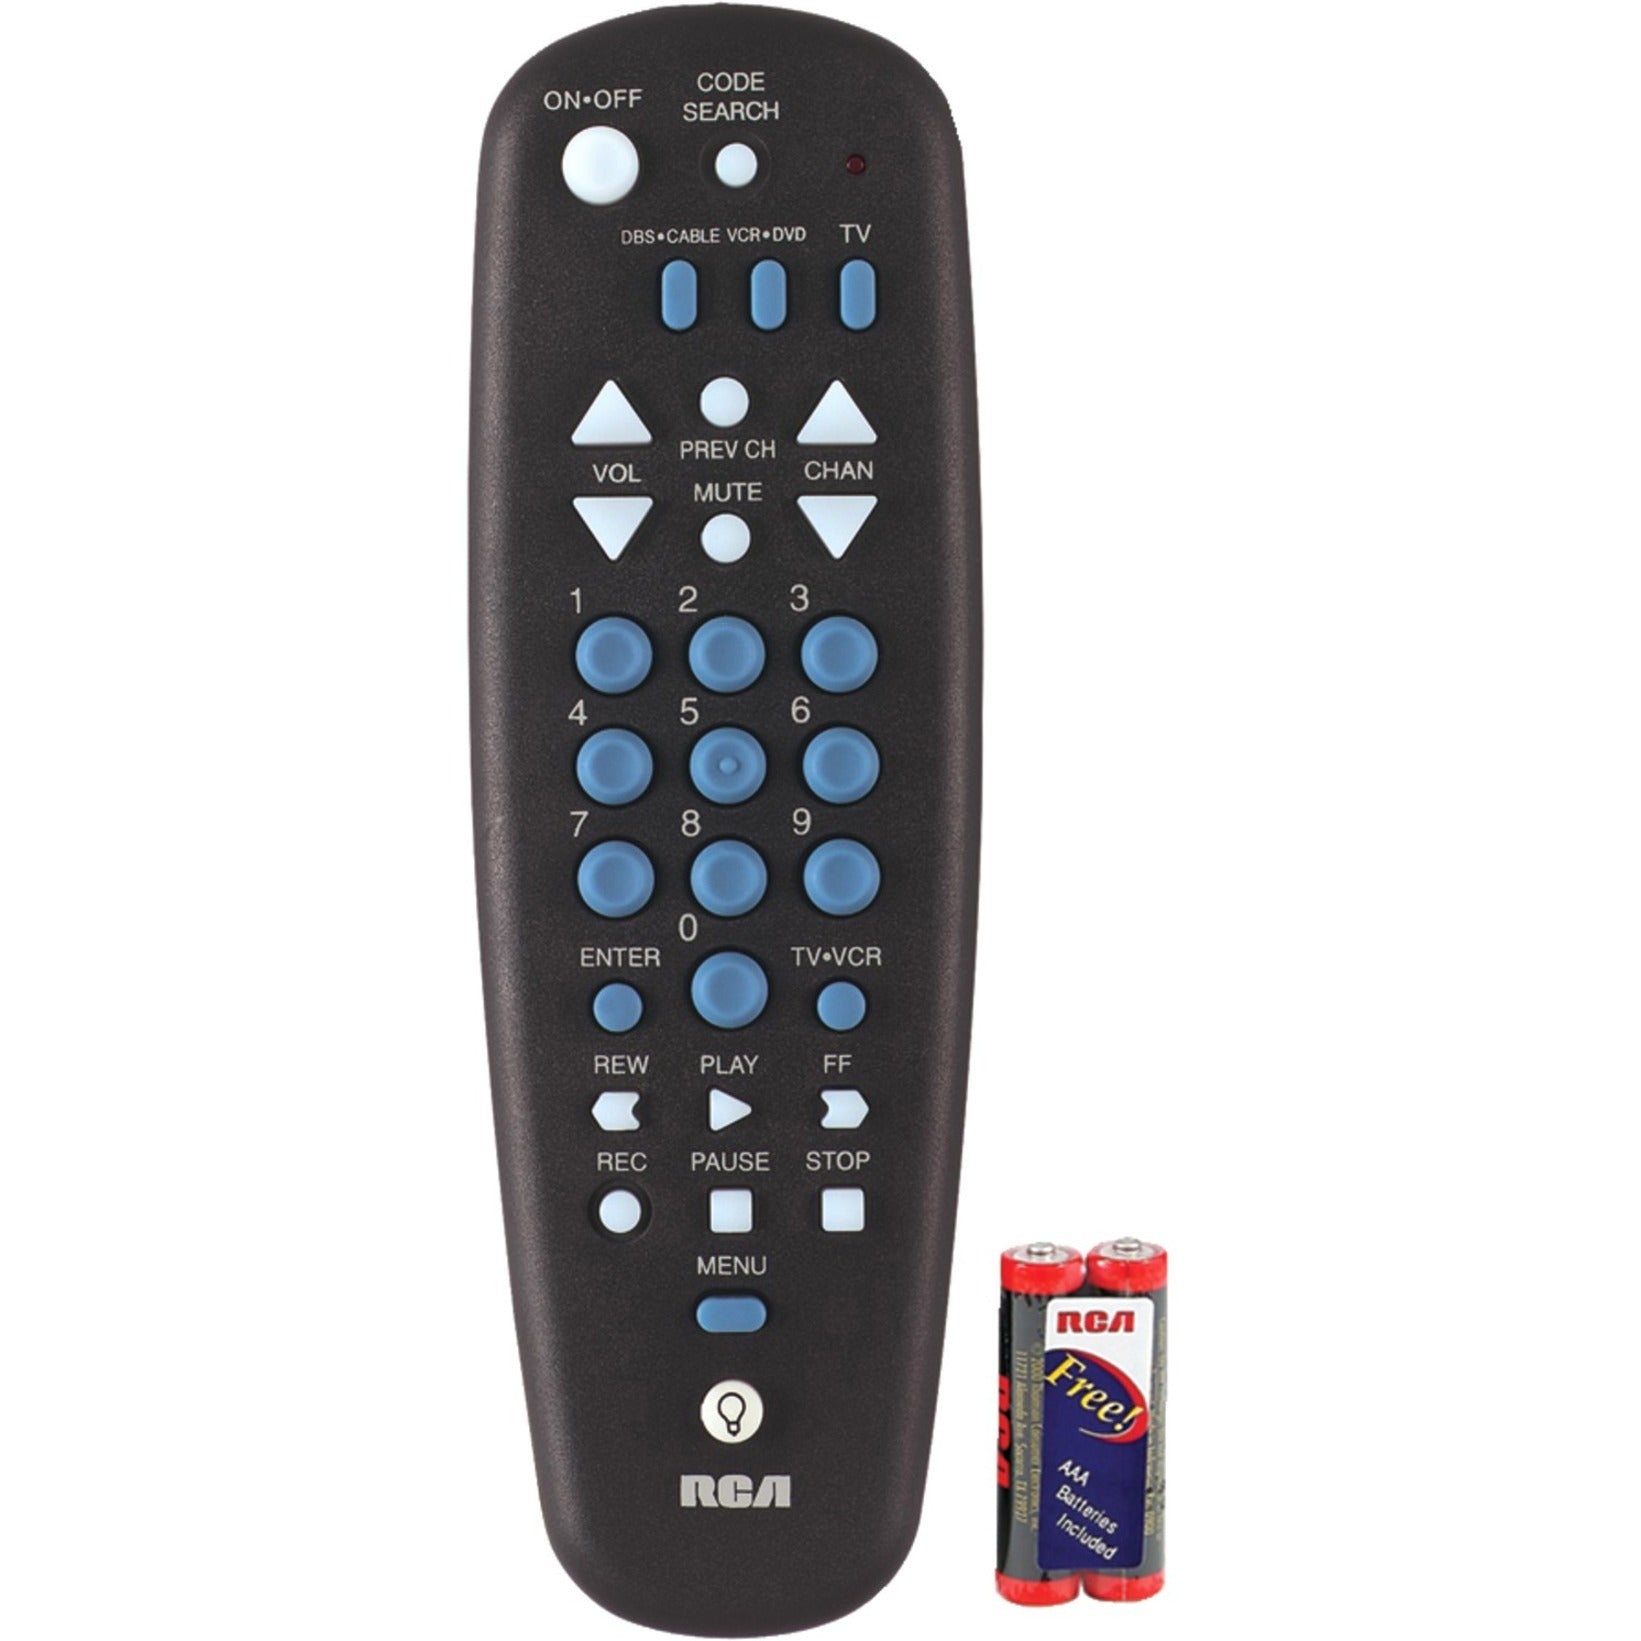 RCA RCU300TR 3 Device Universal Remote, Wireless Control for Satellite Box, Cable Box, DVD Player, TV, VCR